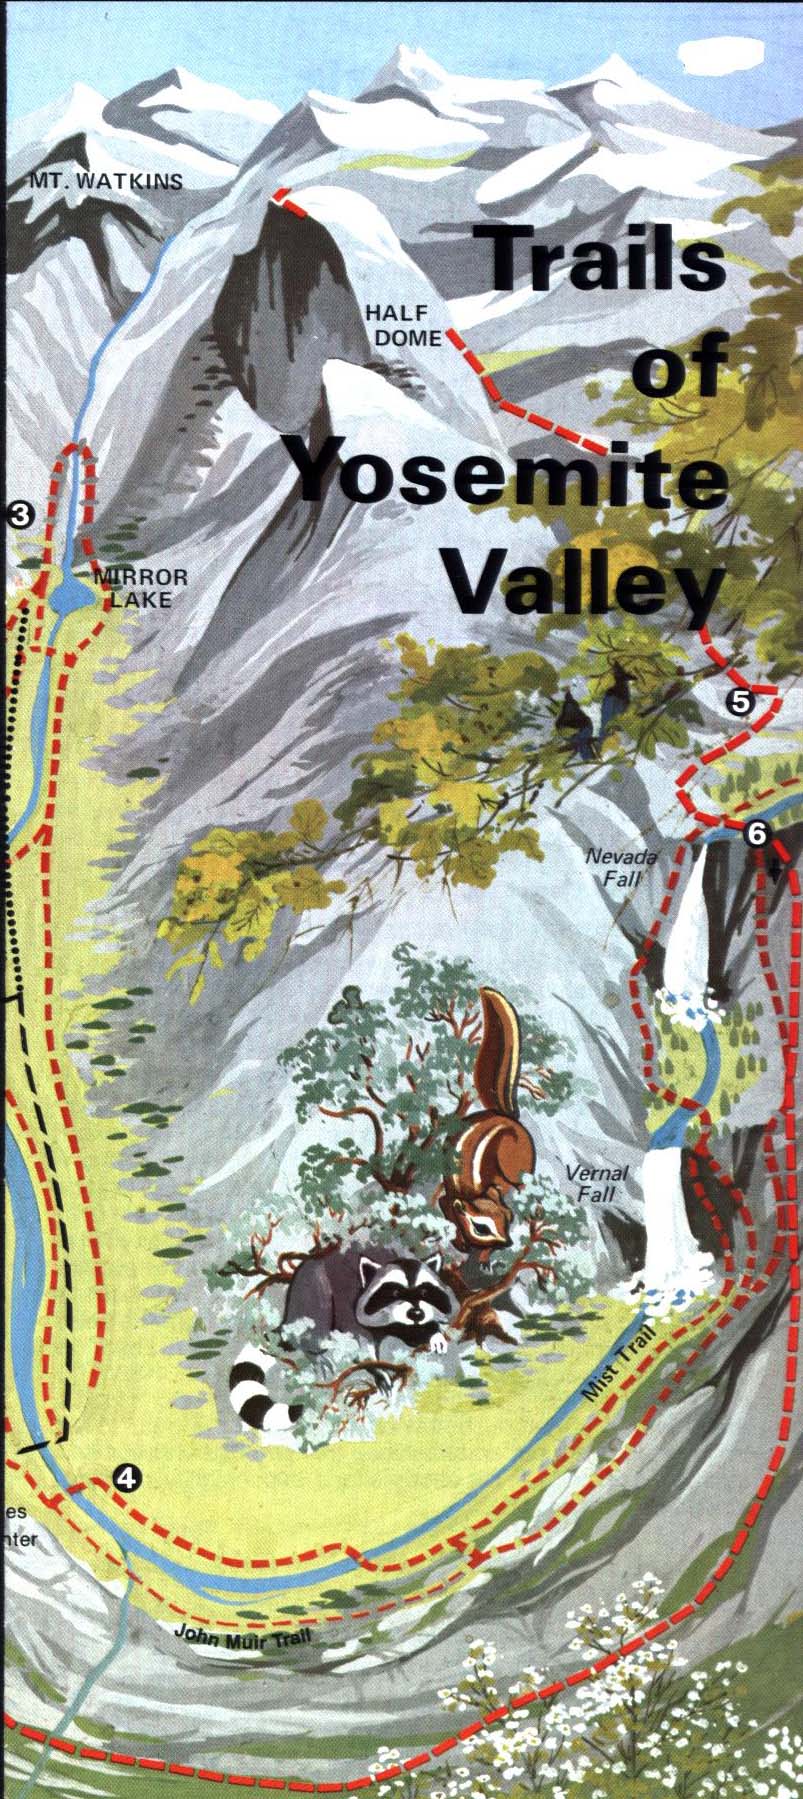 TRAILS OF YOSEMITE VALLEY. 